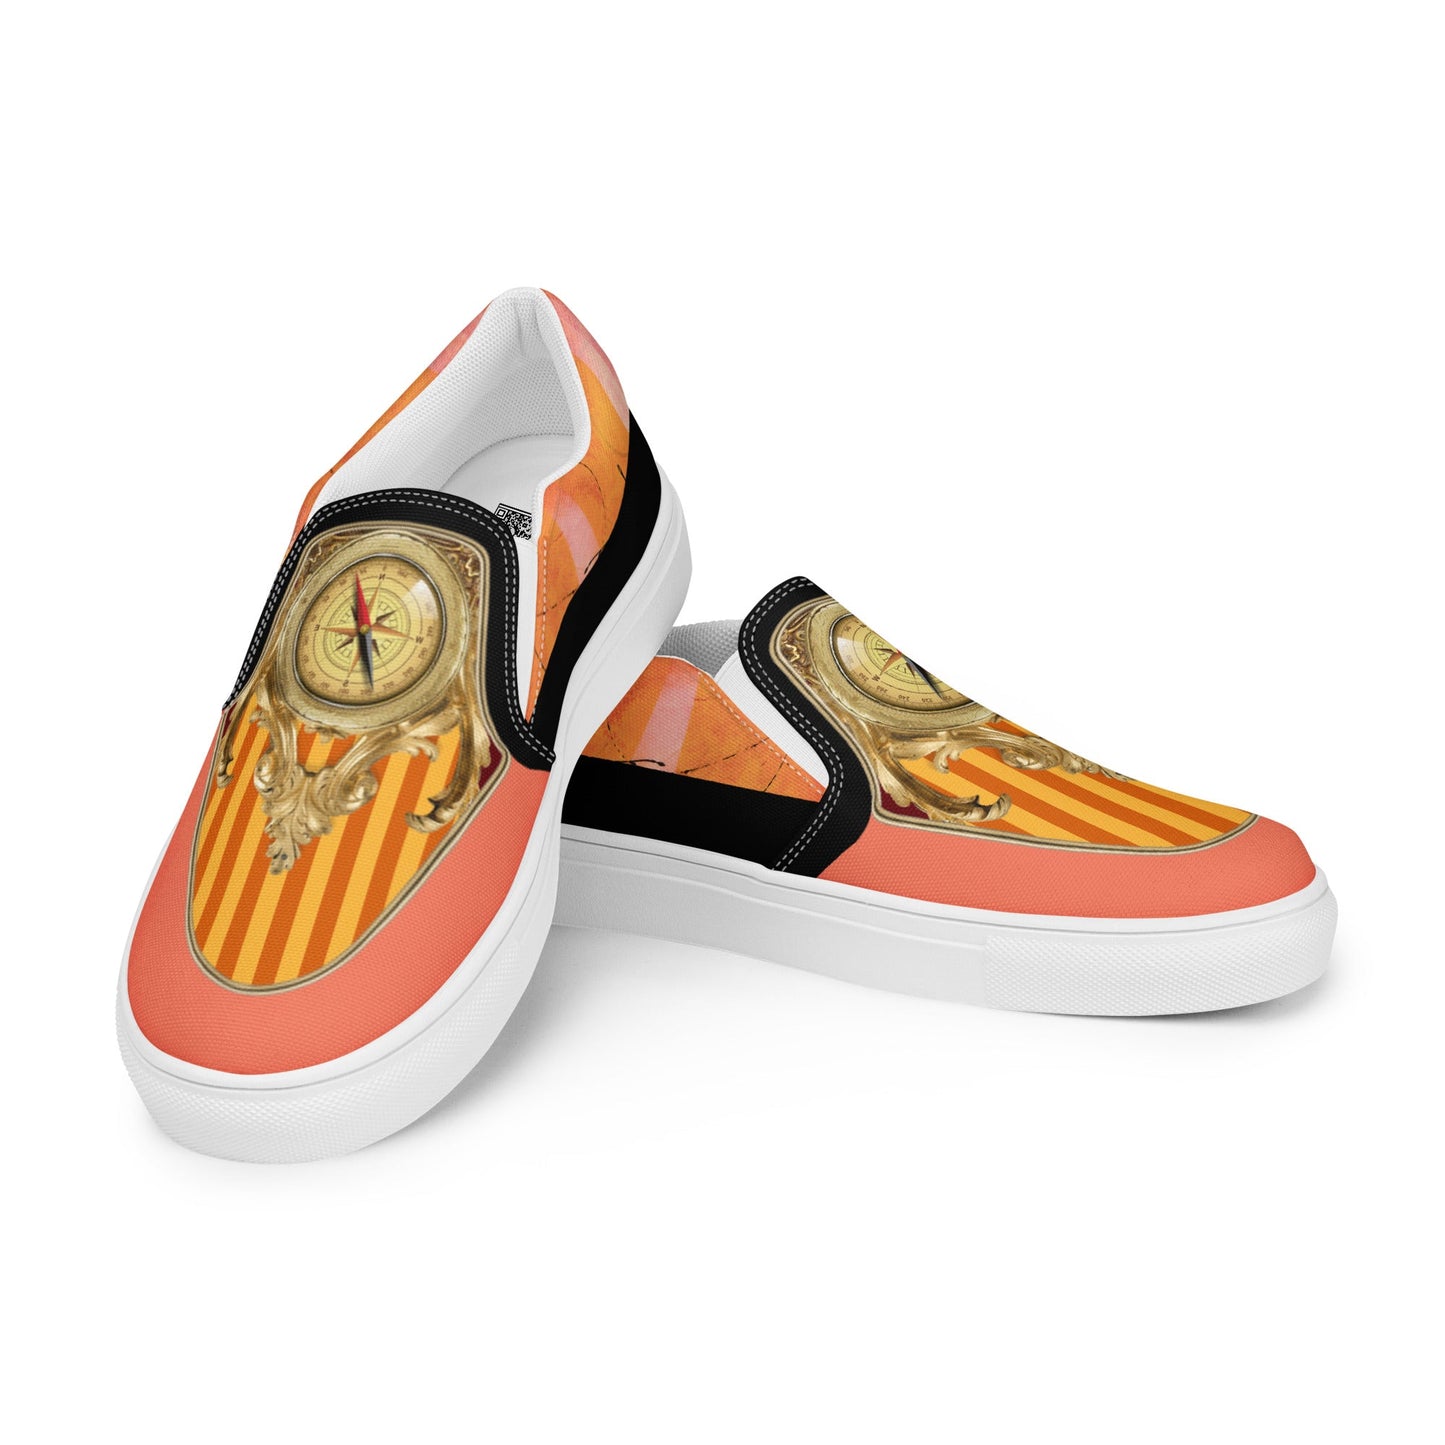 klasneakers Women’s slip-on canvas shoes - Gold Compass